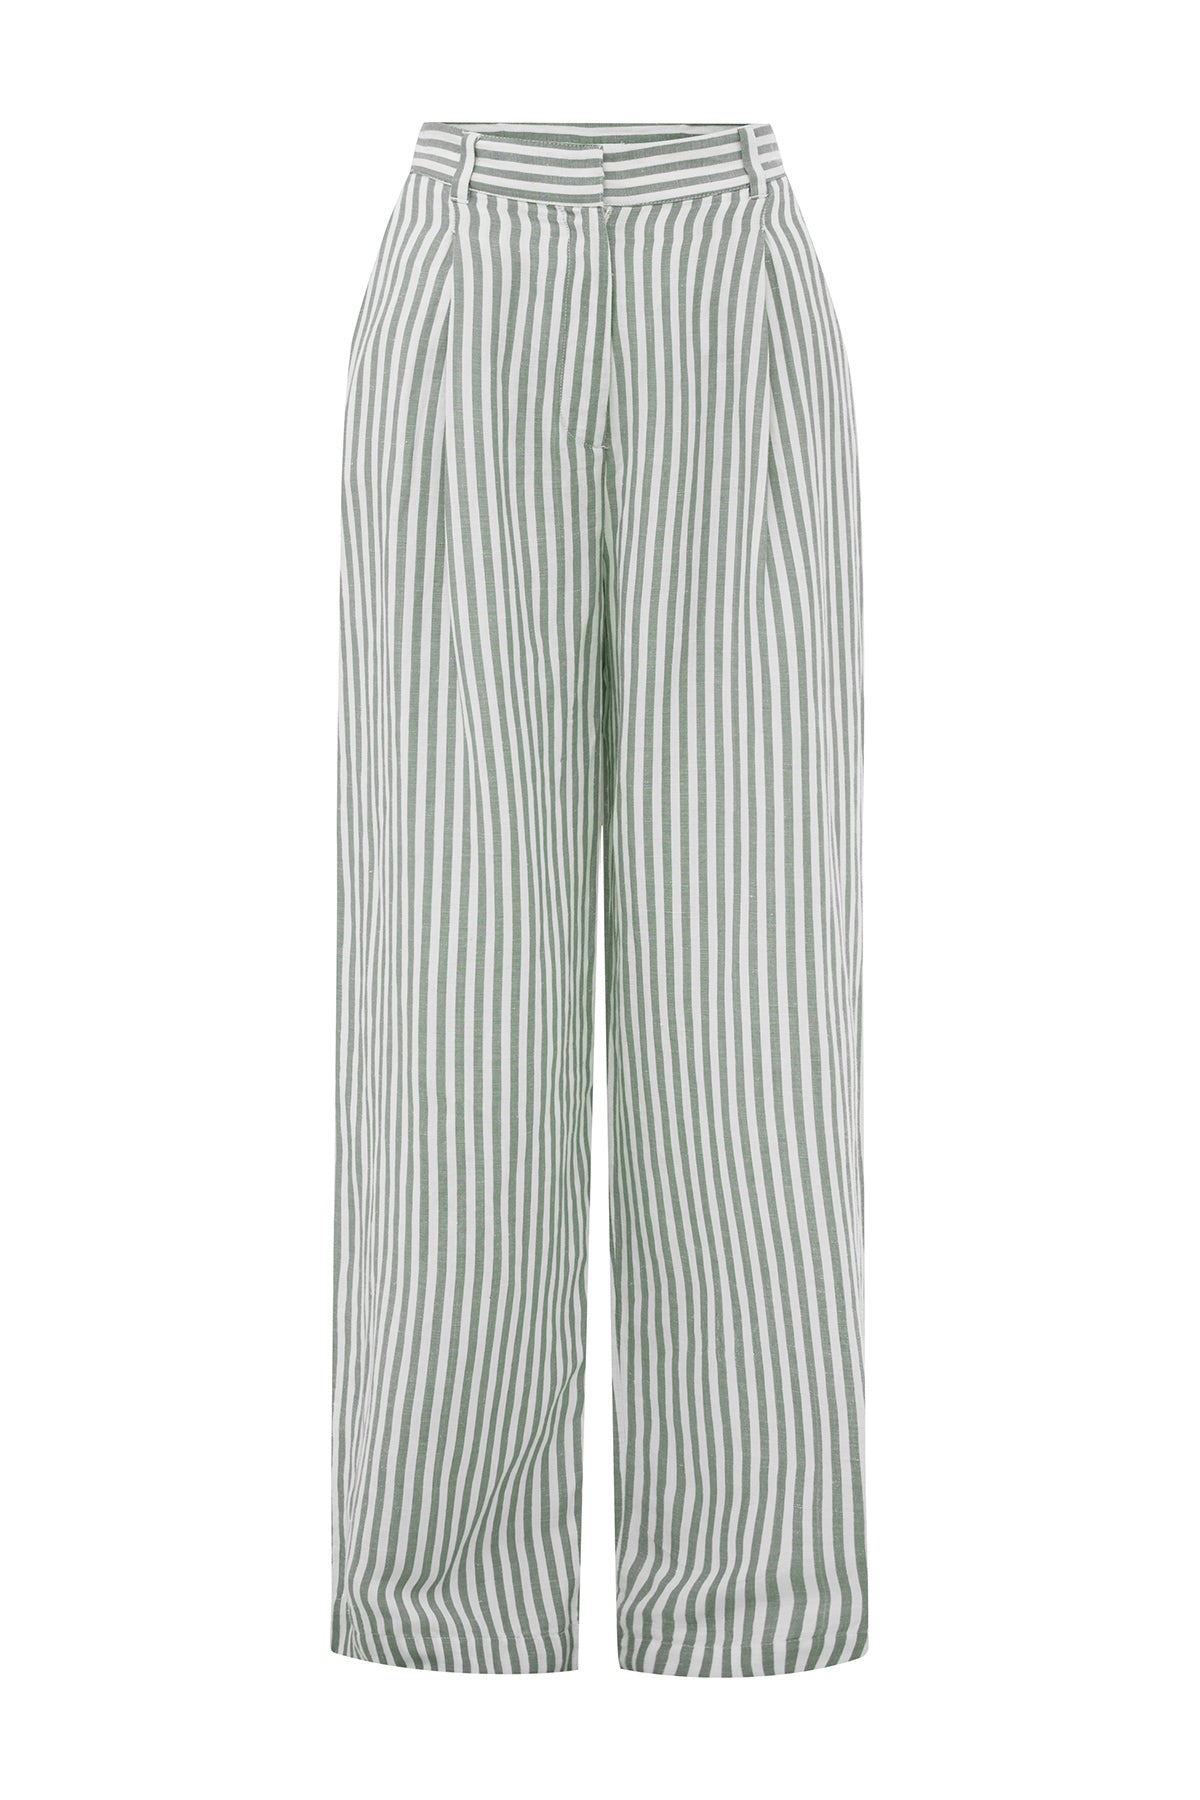 Posse Lorenzo Pant - Seagrass Stripe